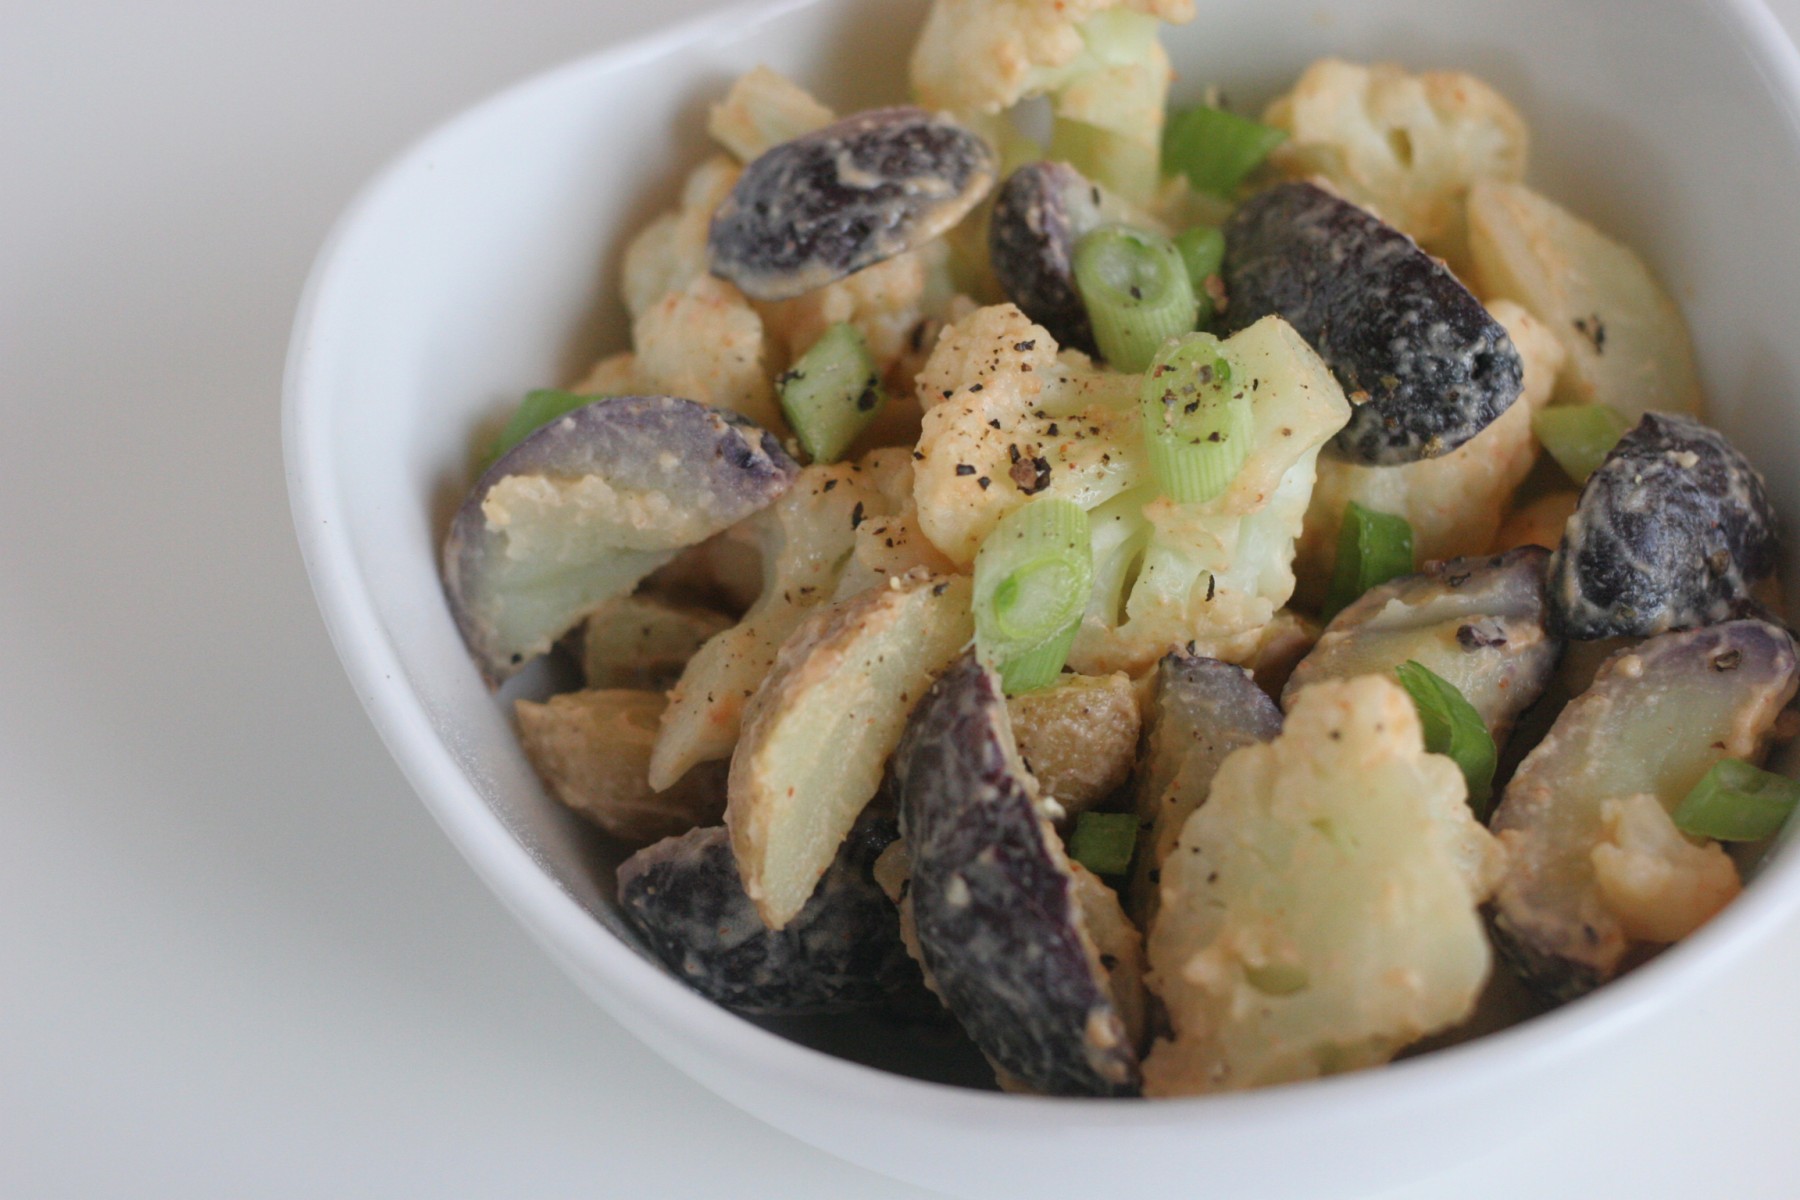 Spicy Potato Salad with Cauliflower